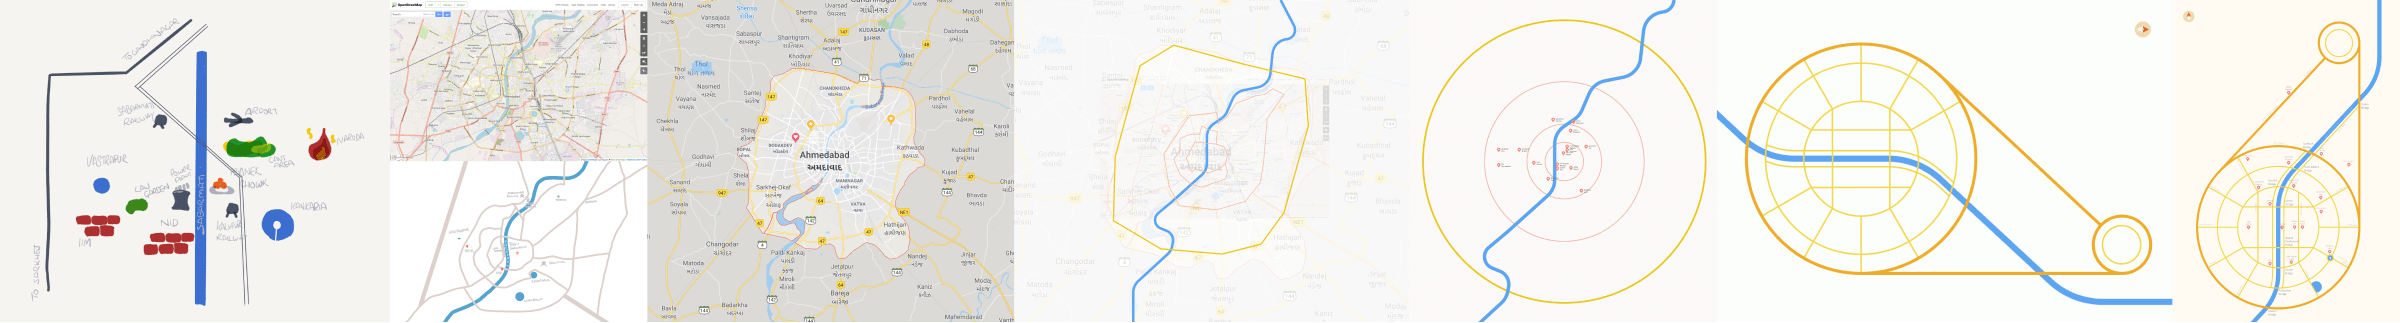 Process of Schematic map of Ahmedabad & Gandhinagar by Akshay